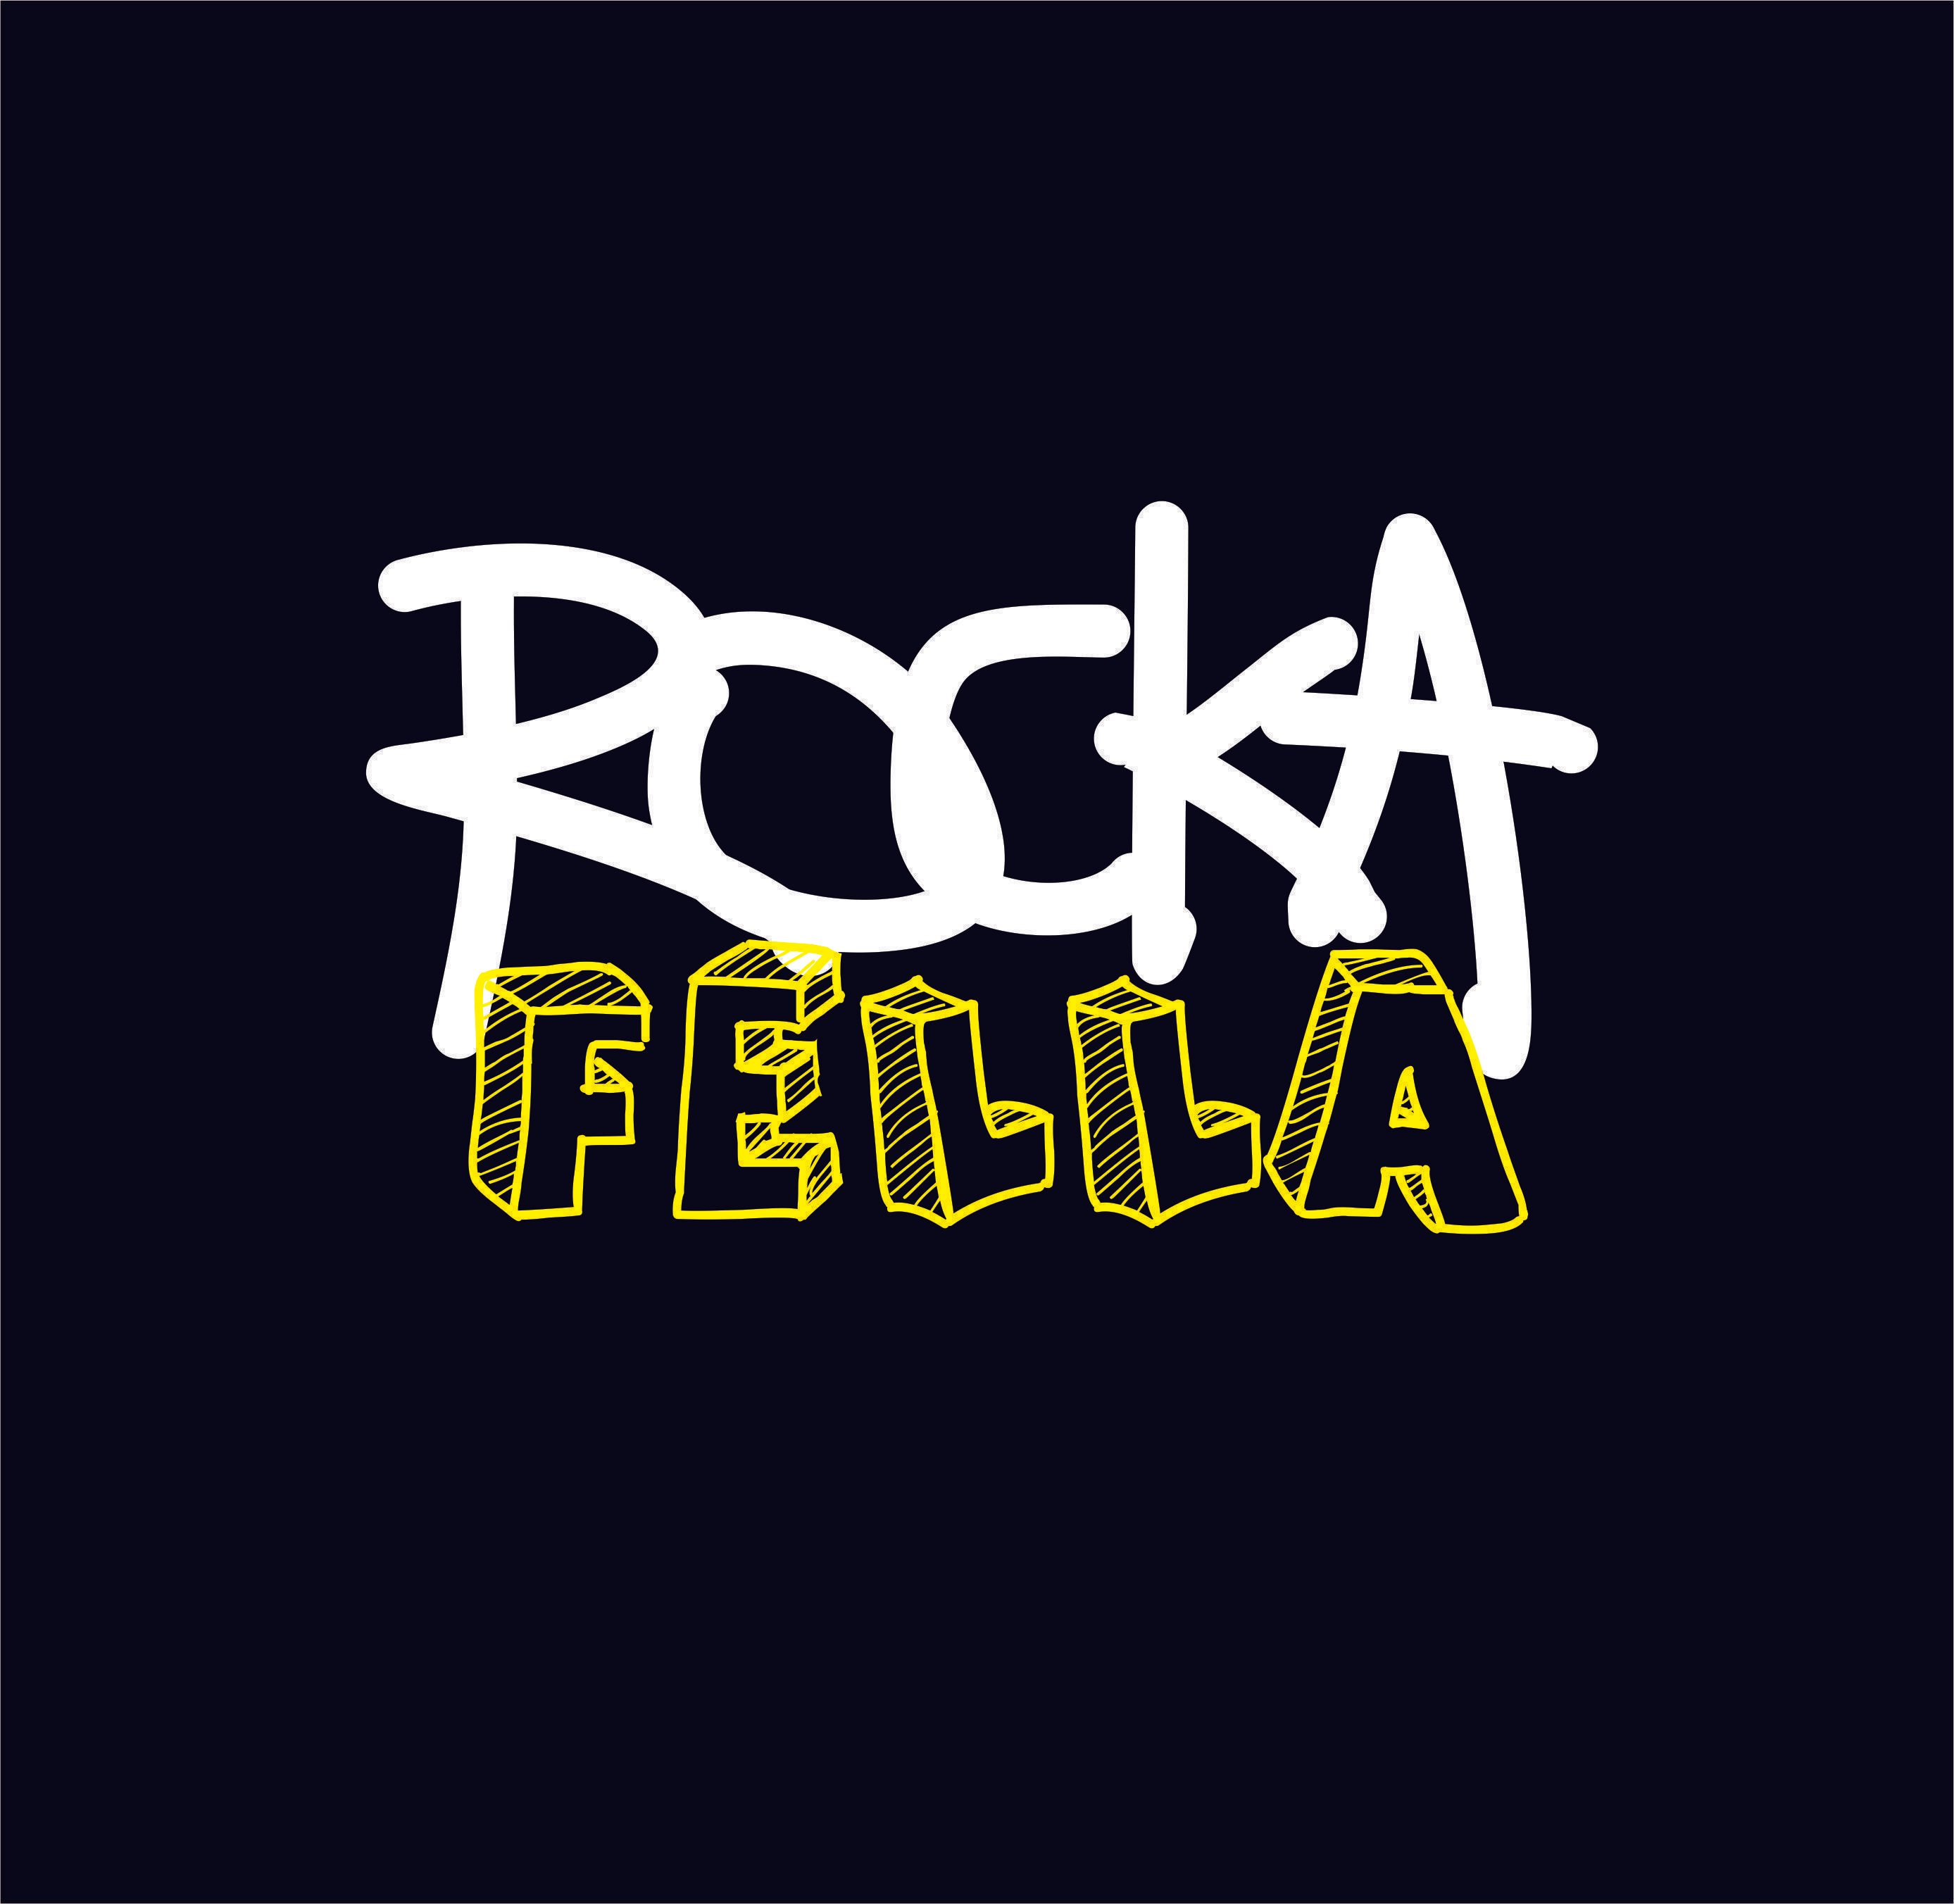 Rockafella rock RocknRolla (2008)